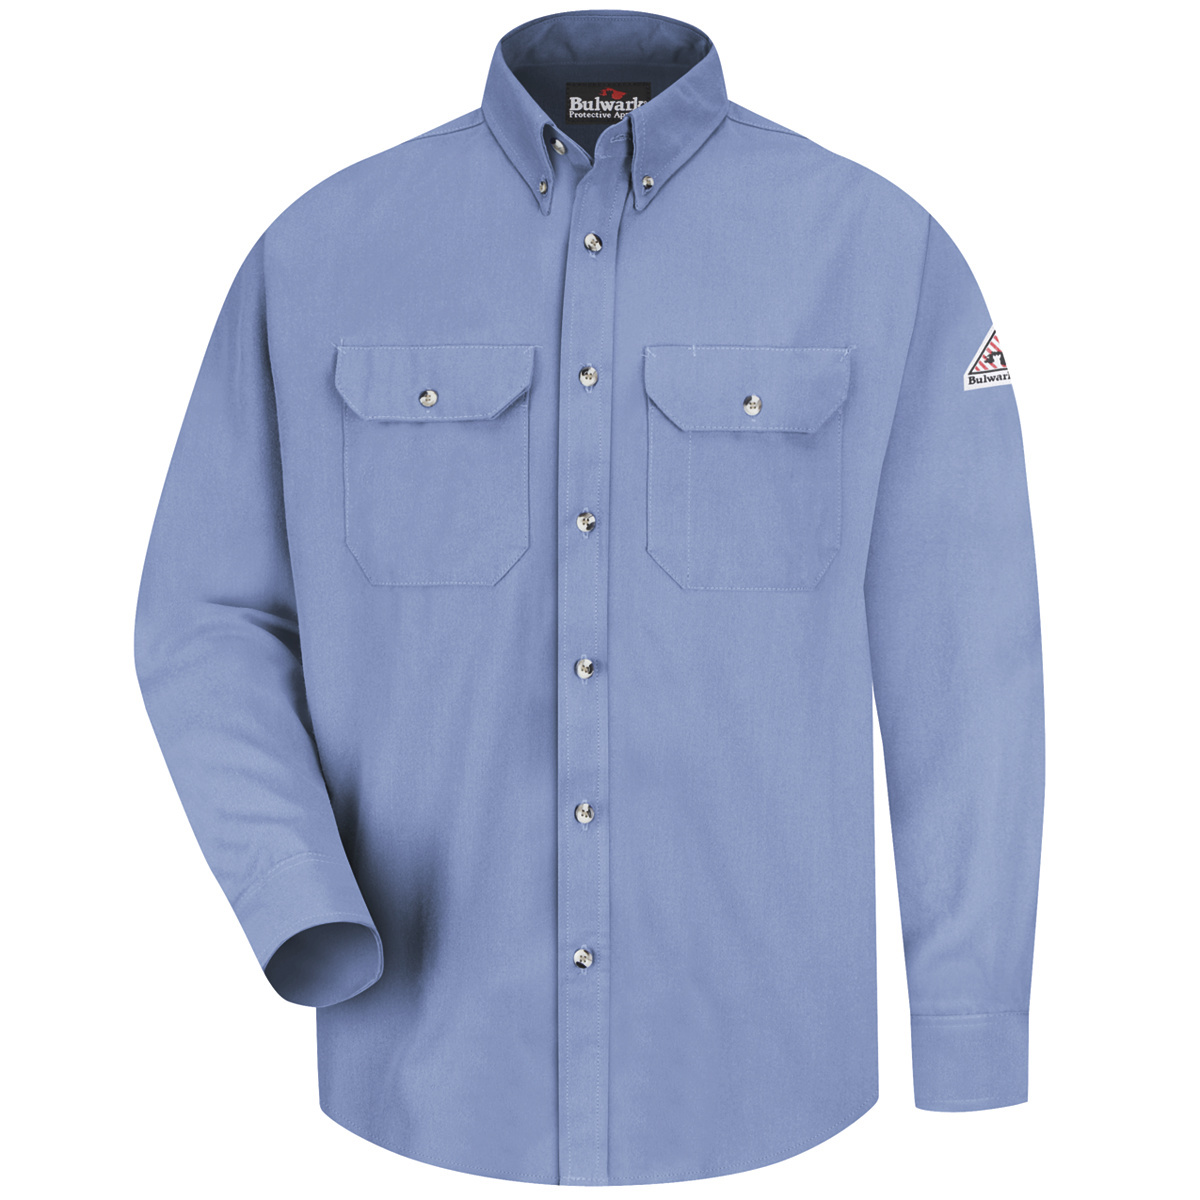 Bulwark® Large Tall Light Blue Modacrylic/Lyocell/Aramid Flame Resistant Dress Uniform Shirt With Button Front Closure